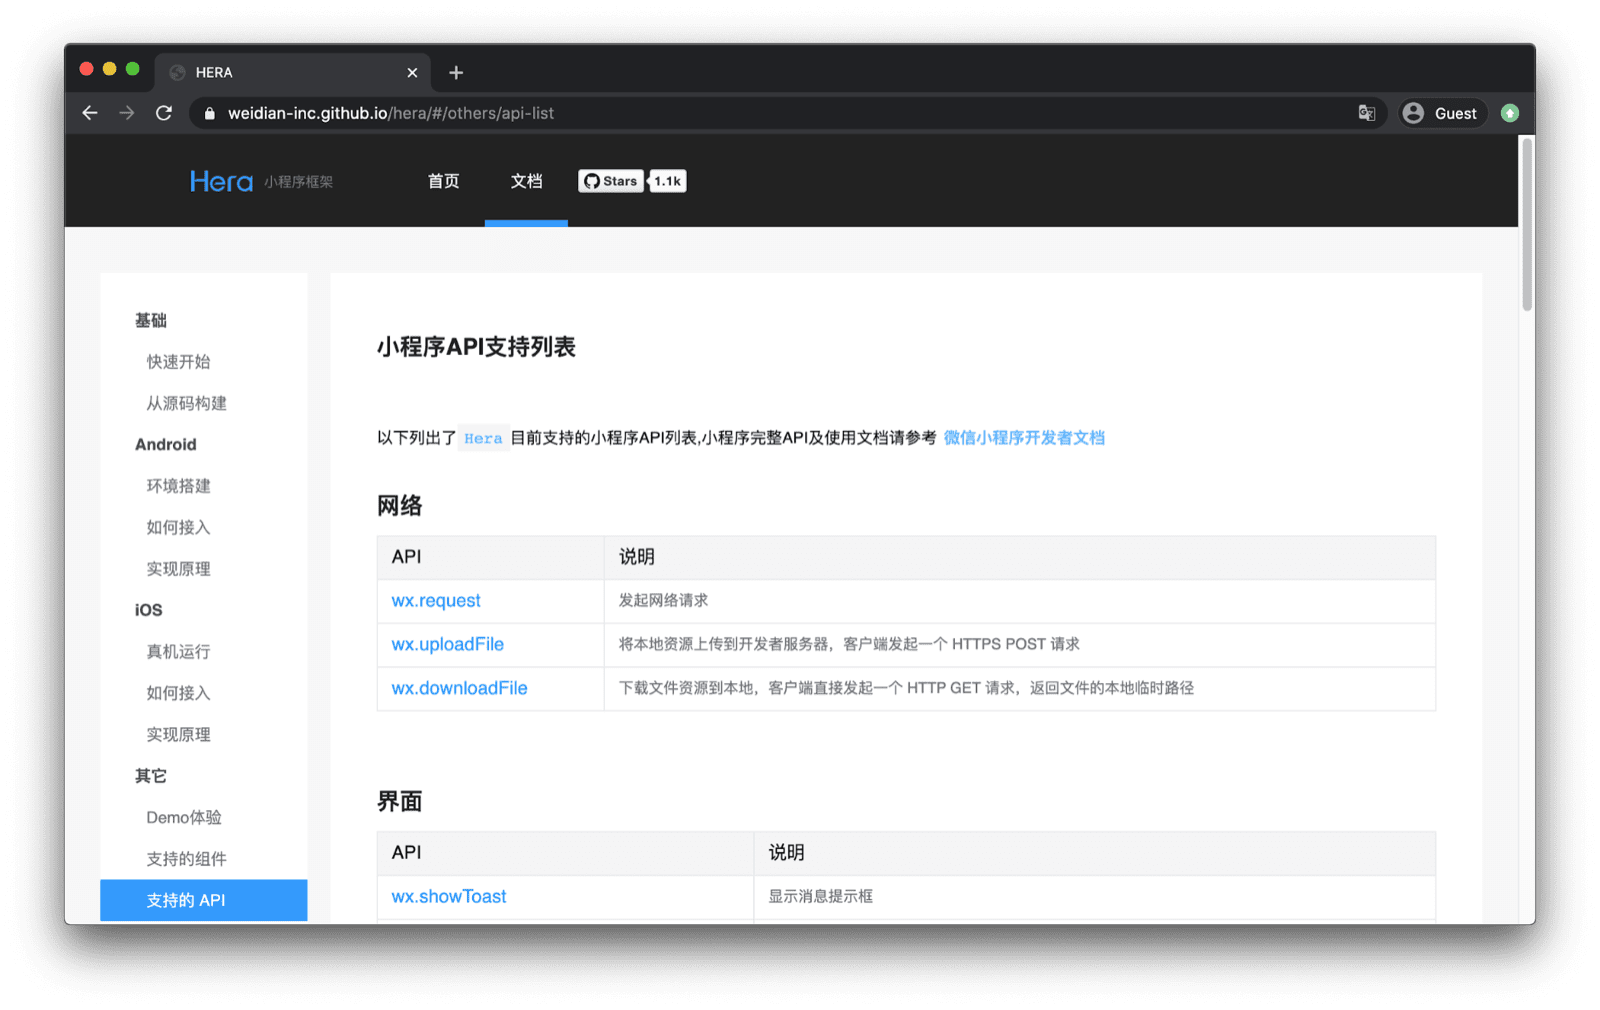 Documentación del framework de la miniapp de Hera que incluye las APIs de WeChat que admite, como &quot;wx.request&quot;, &quot;wx.uploadFile&quot;, etcétera.